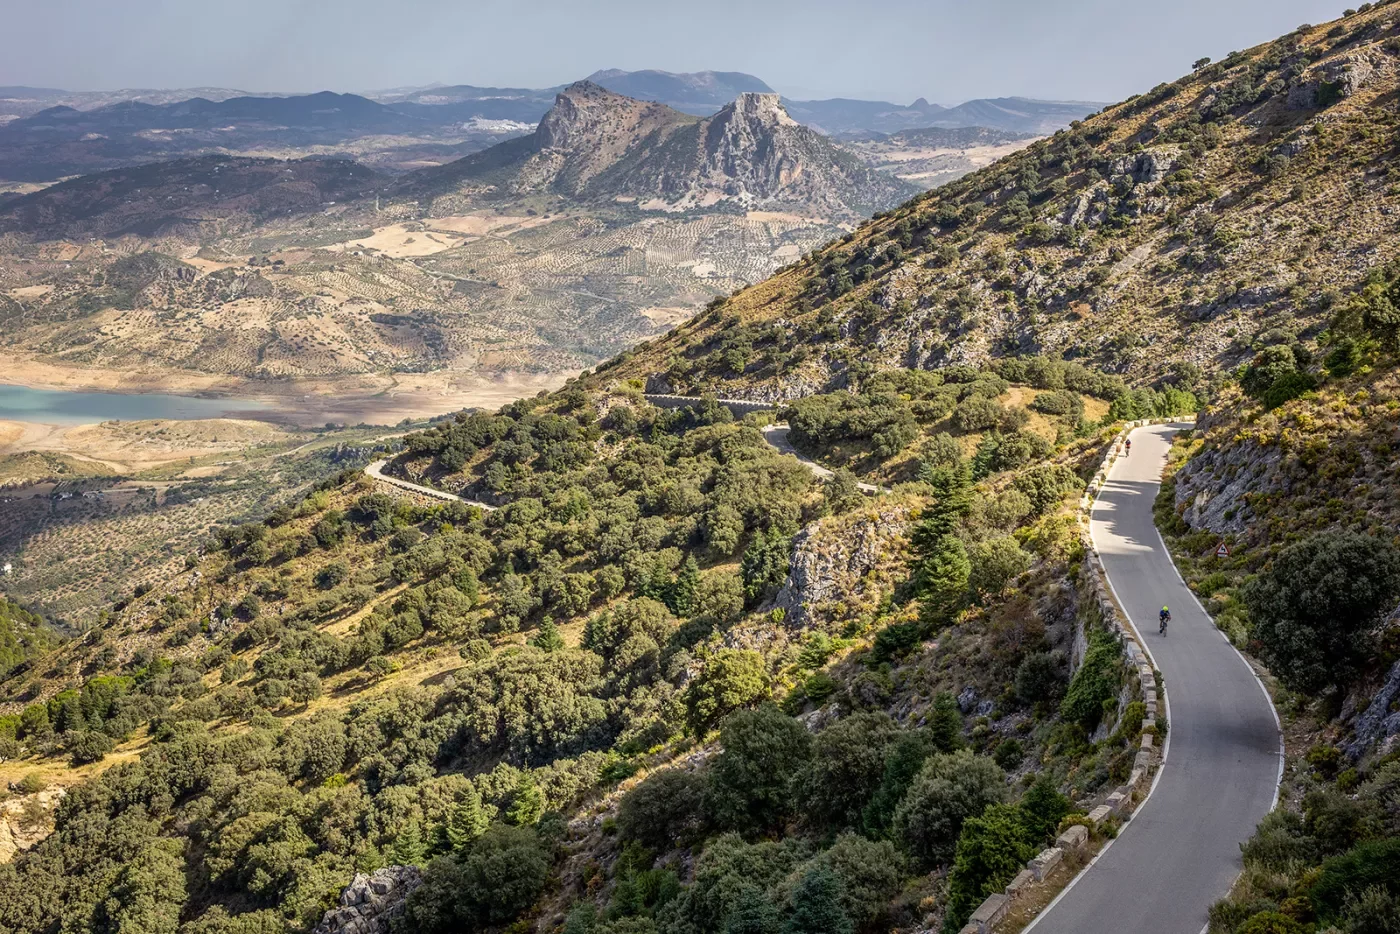 Two Backroads' guests biking on road in mountains, Spain.